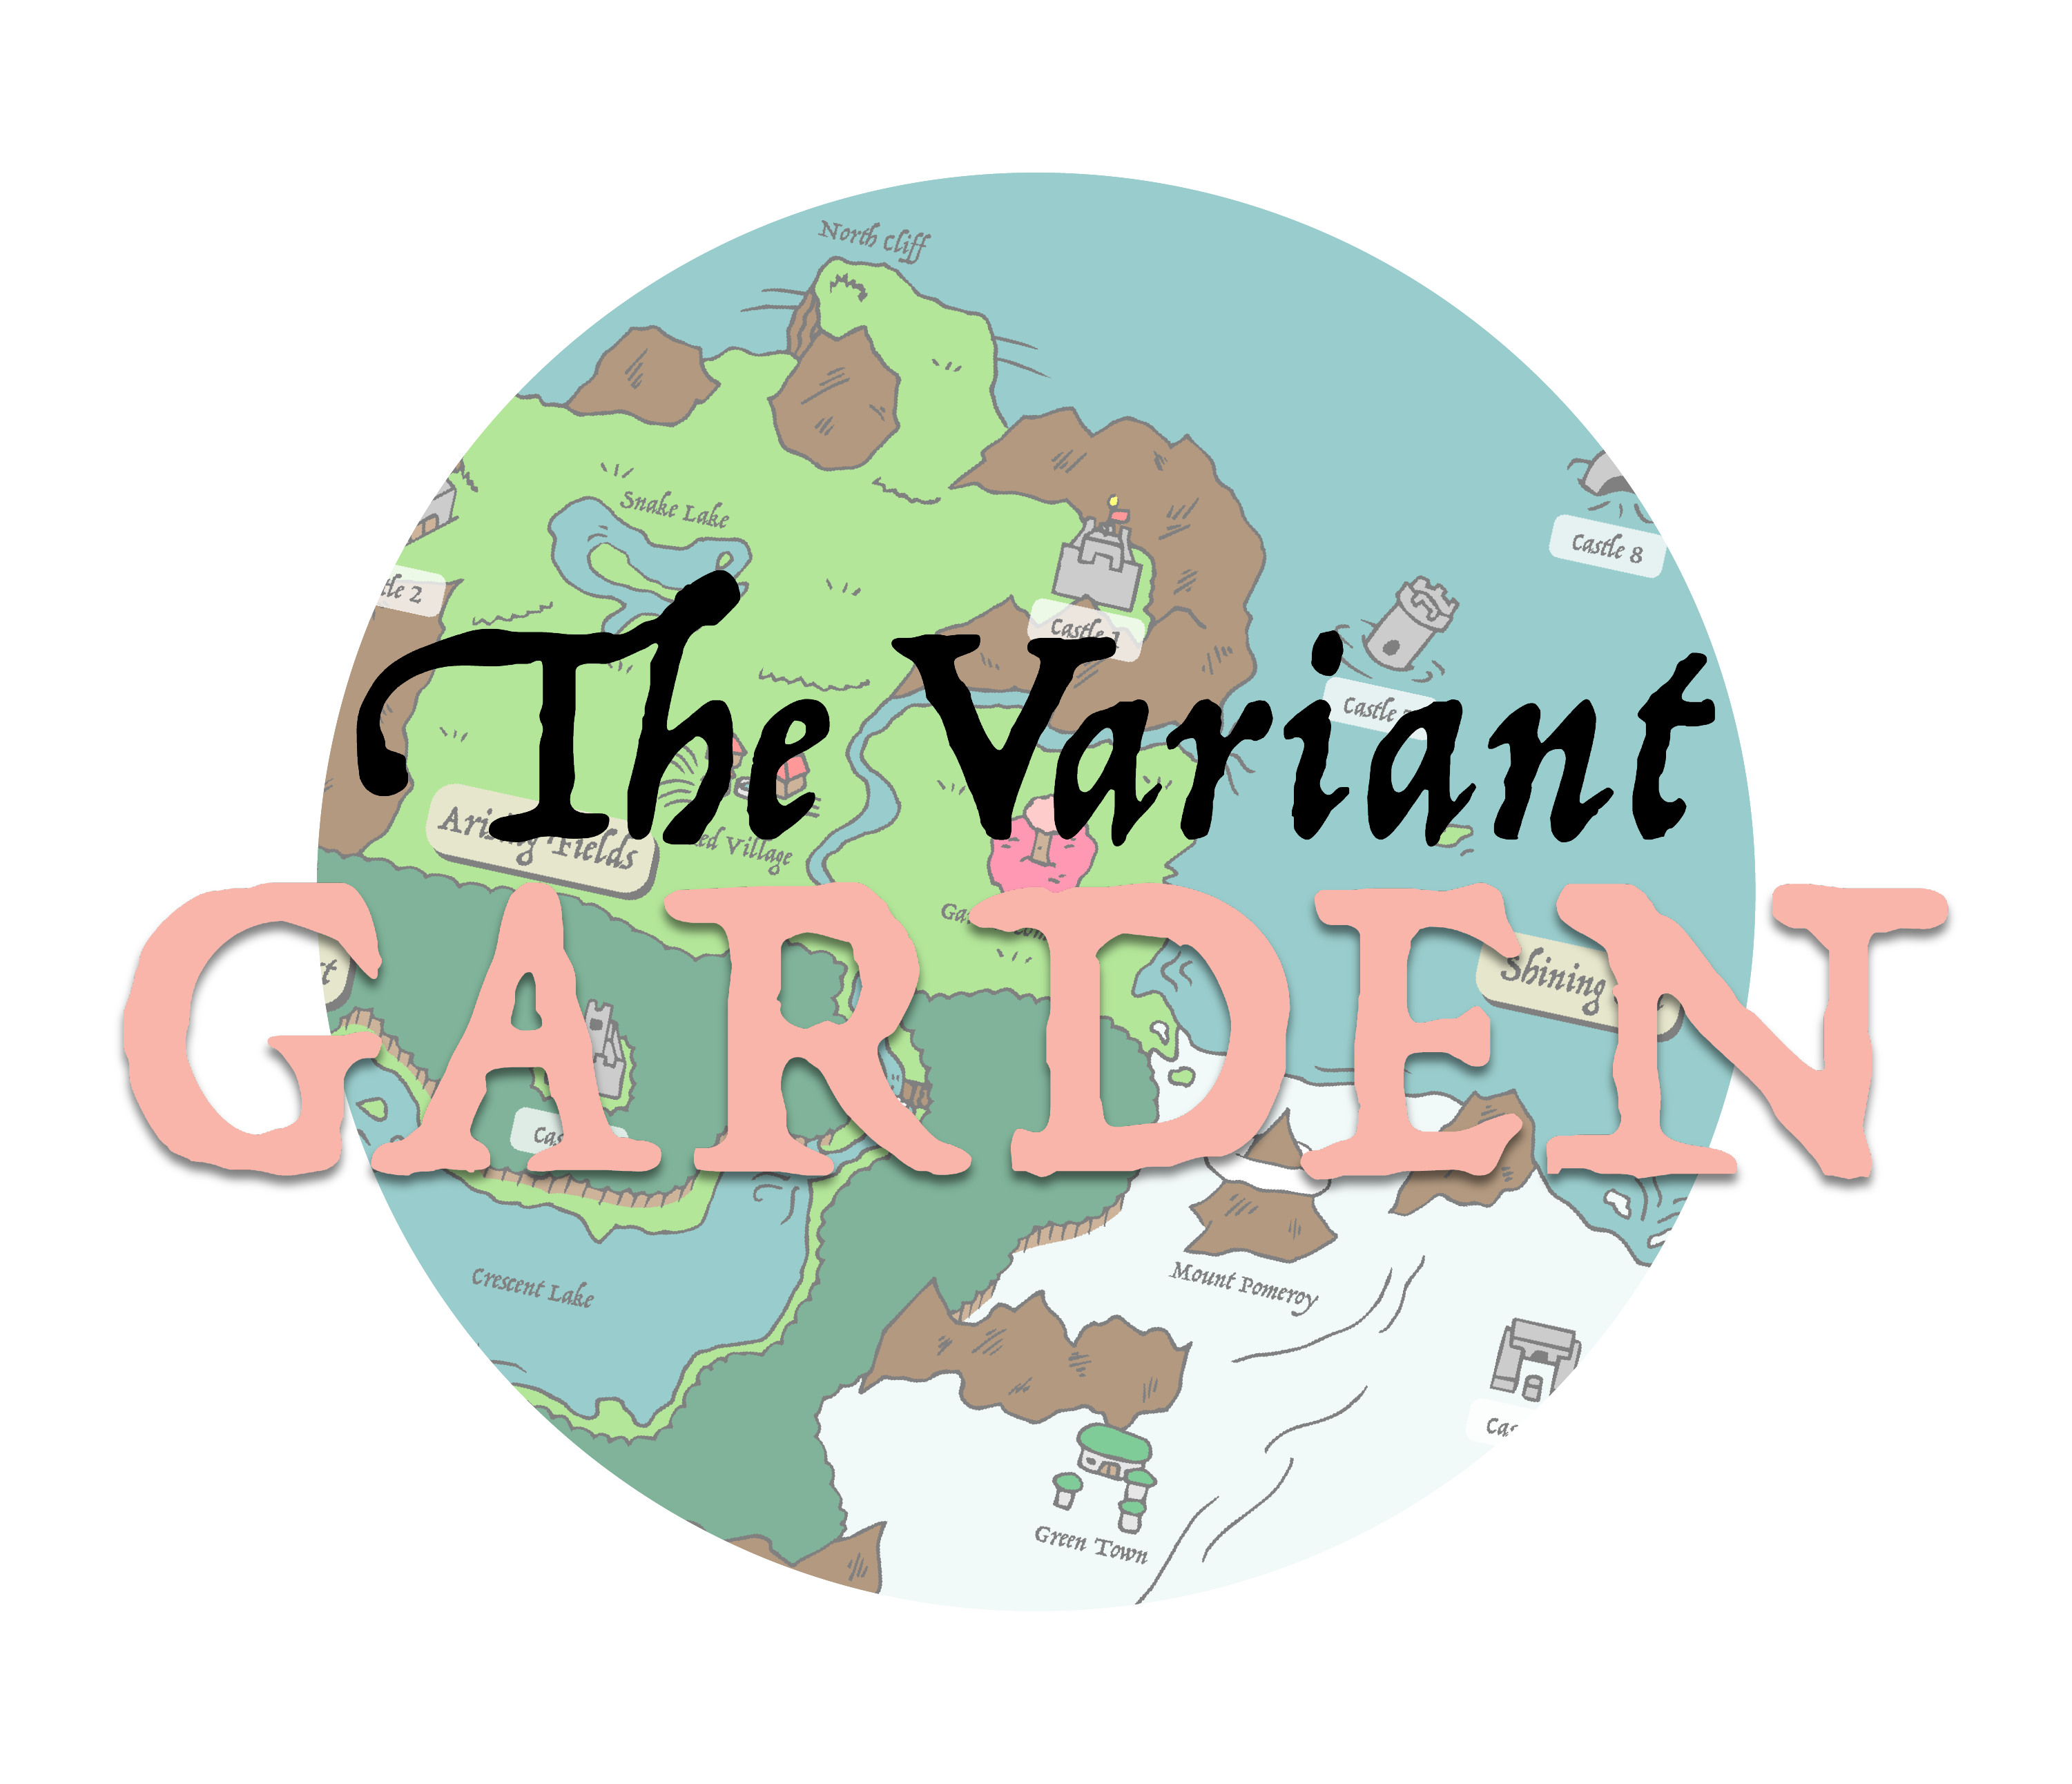 The Variant Garden